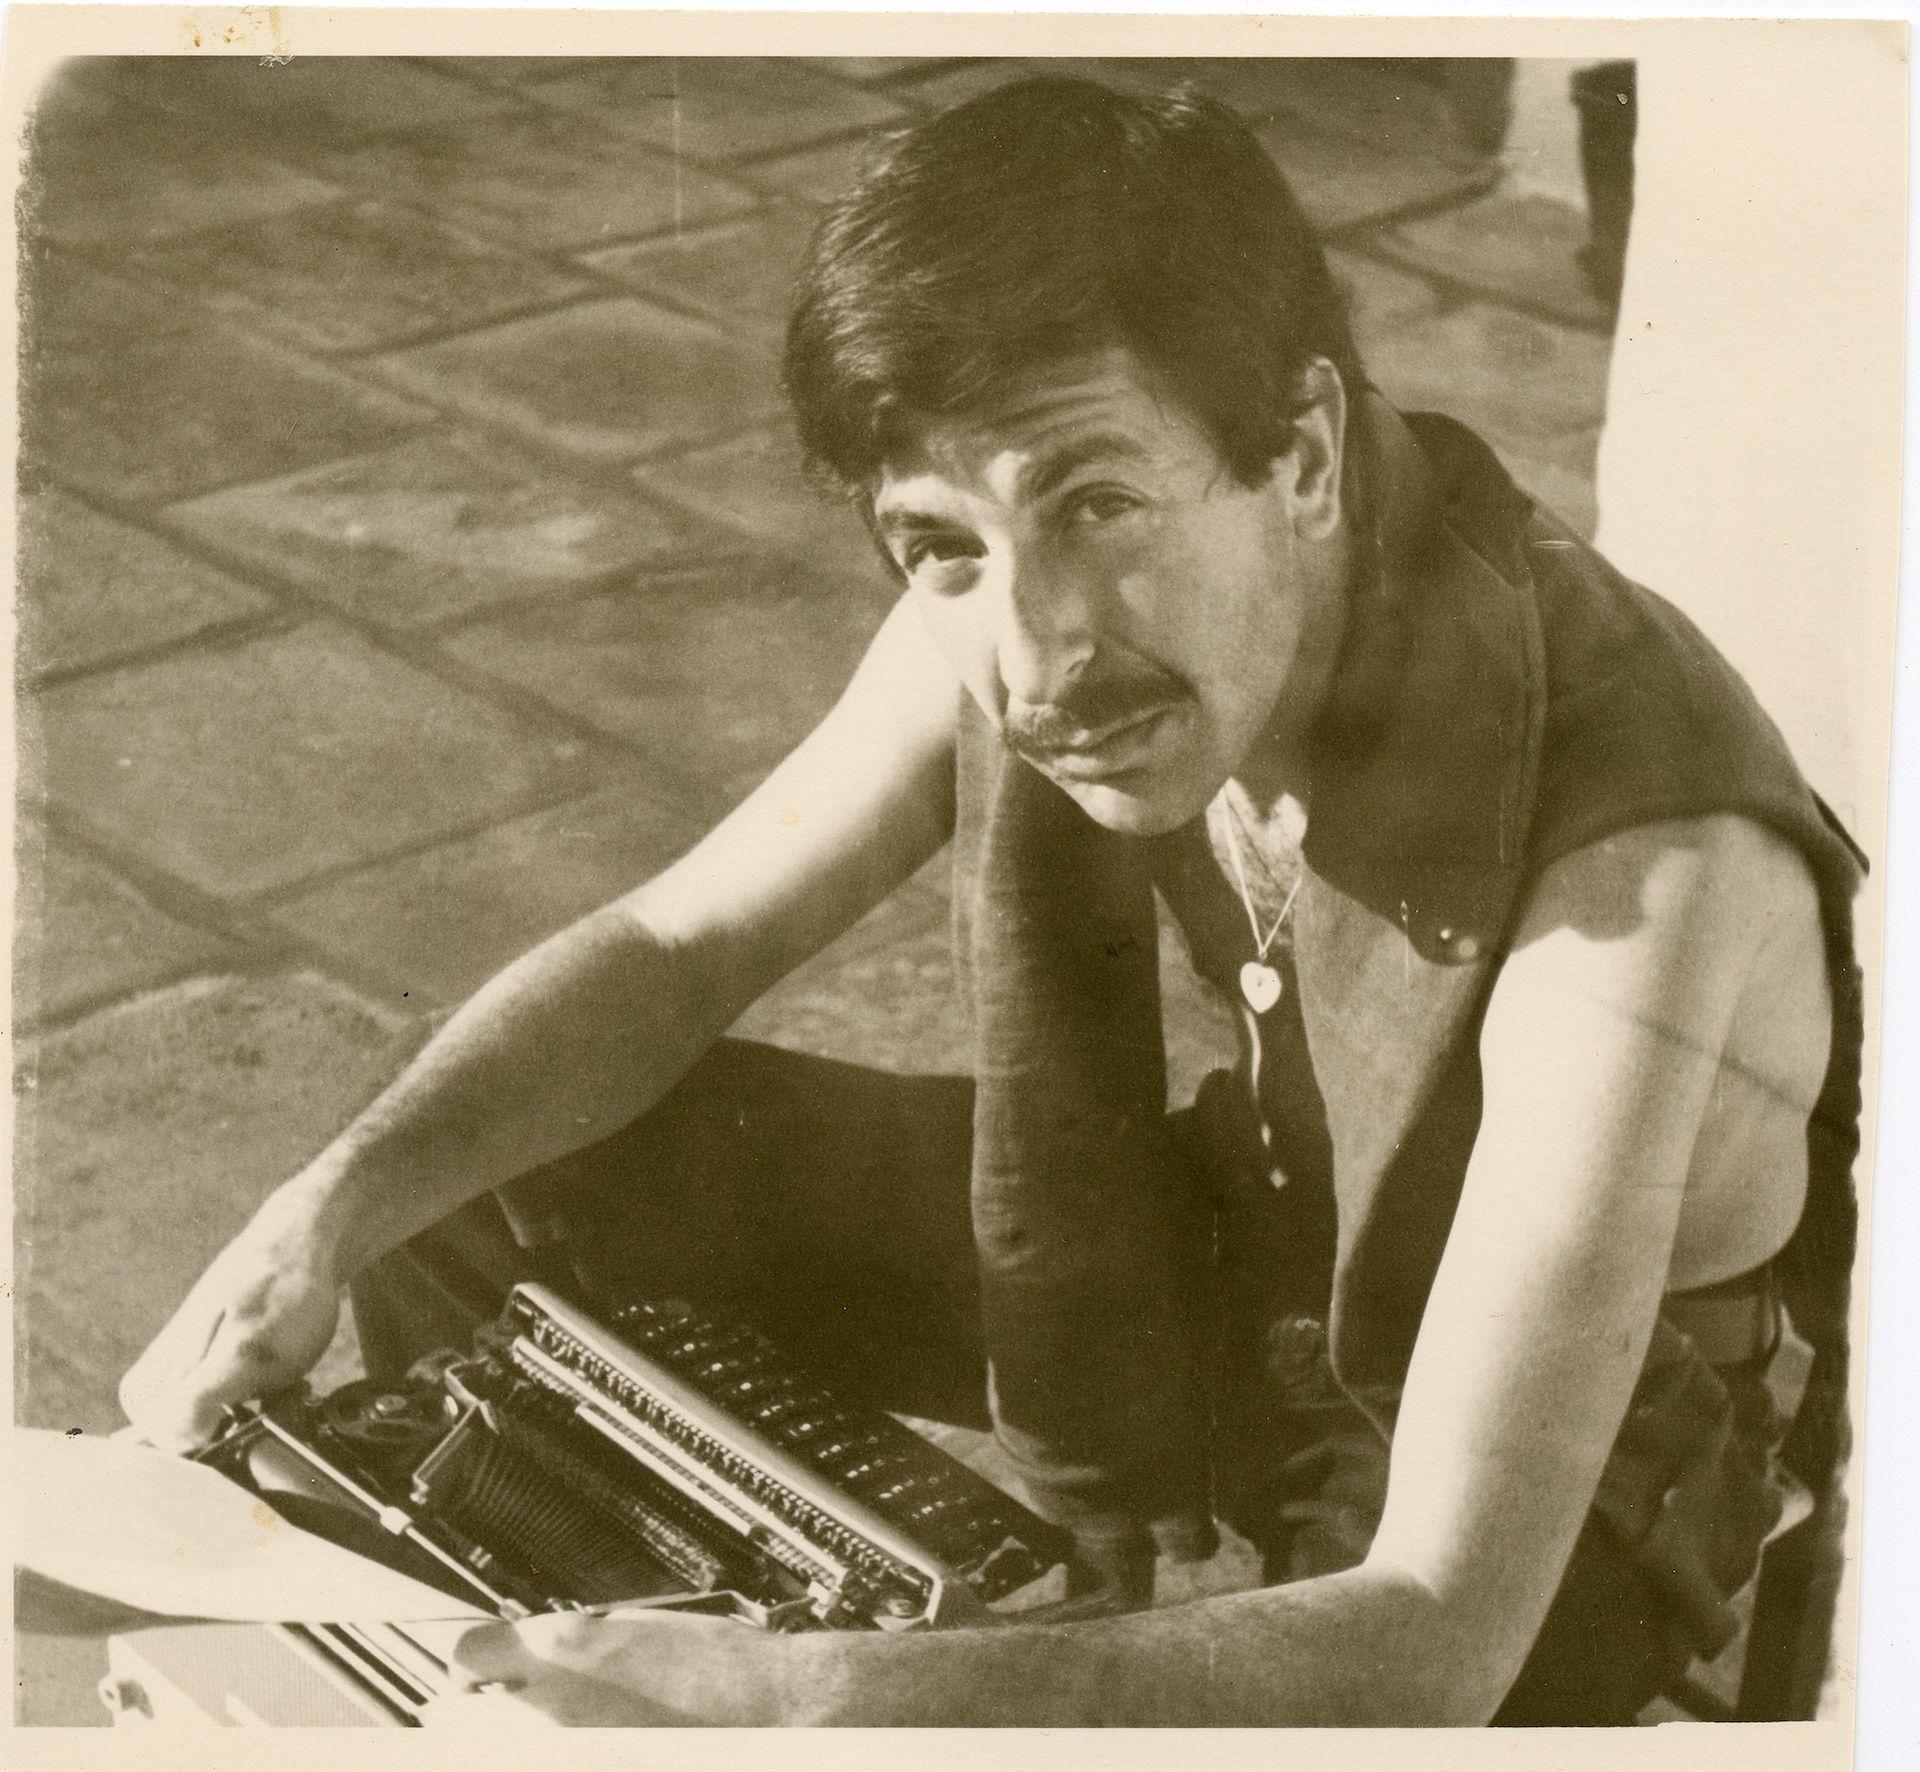 Unknown photographer, Cohen on Hydra [at typewriter], 1960s. © Leonard Cohen Family Trust.